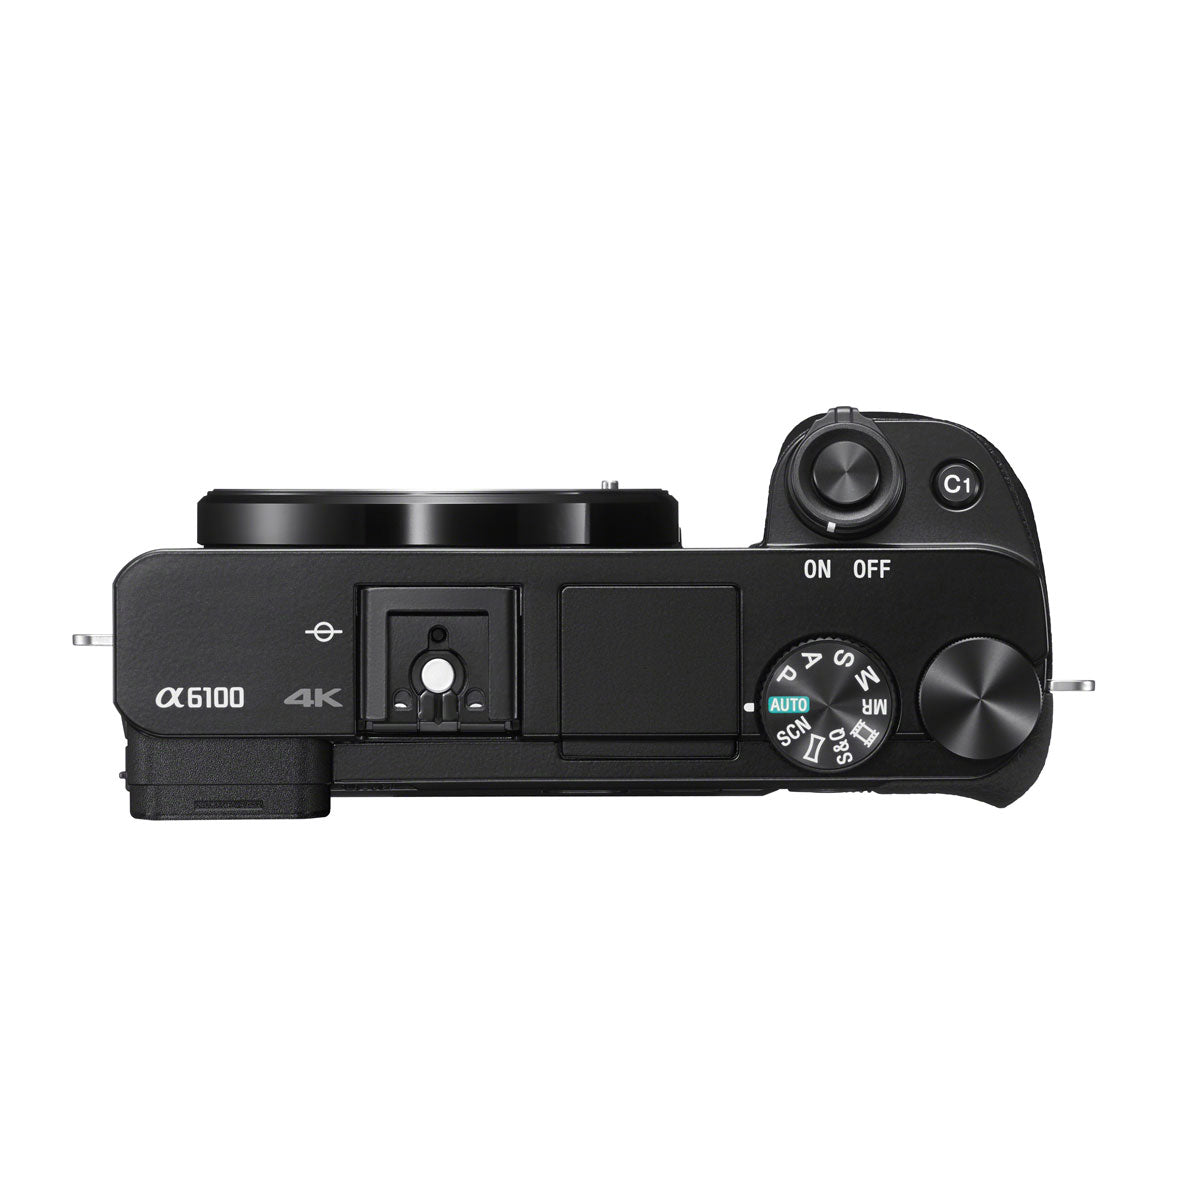 Sony Alpha a6100 Mirrorless Digital Camera Body